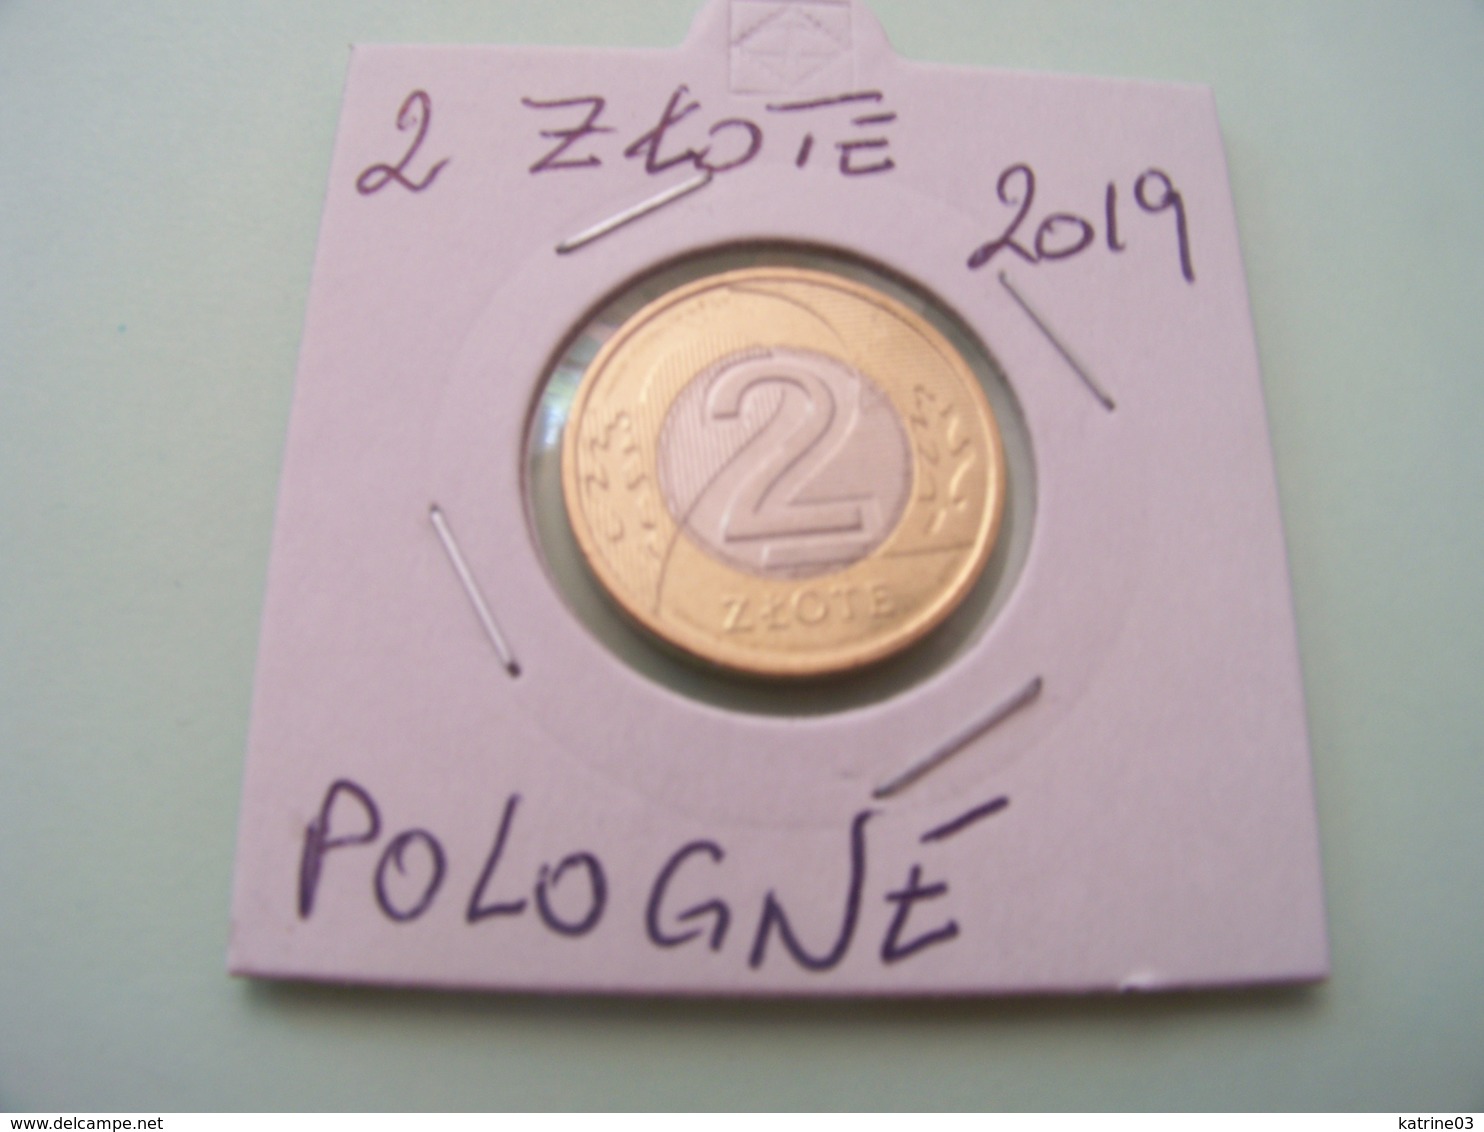 2 Zlote 2019 - Poland